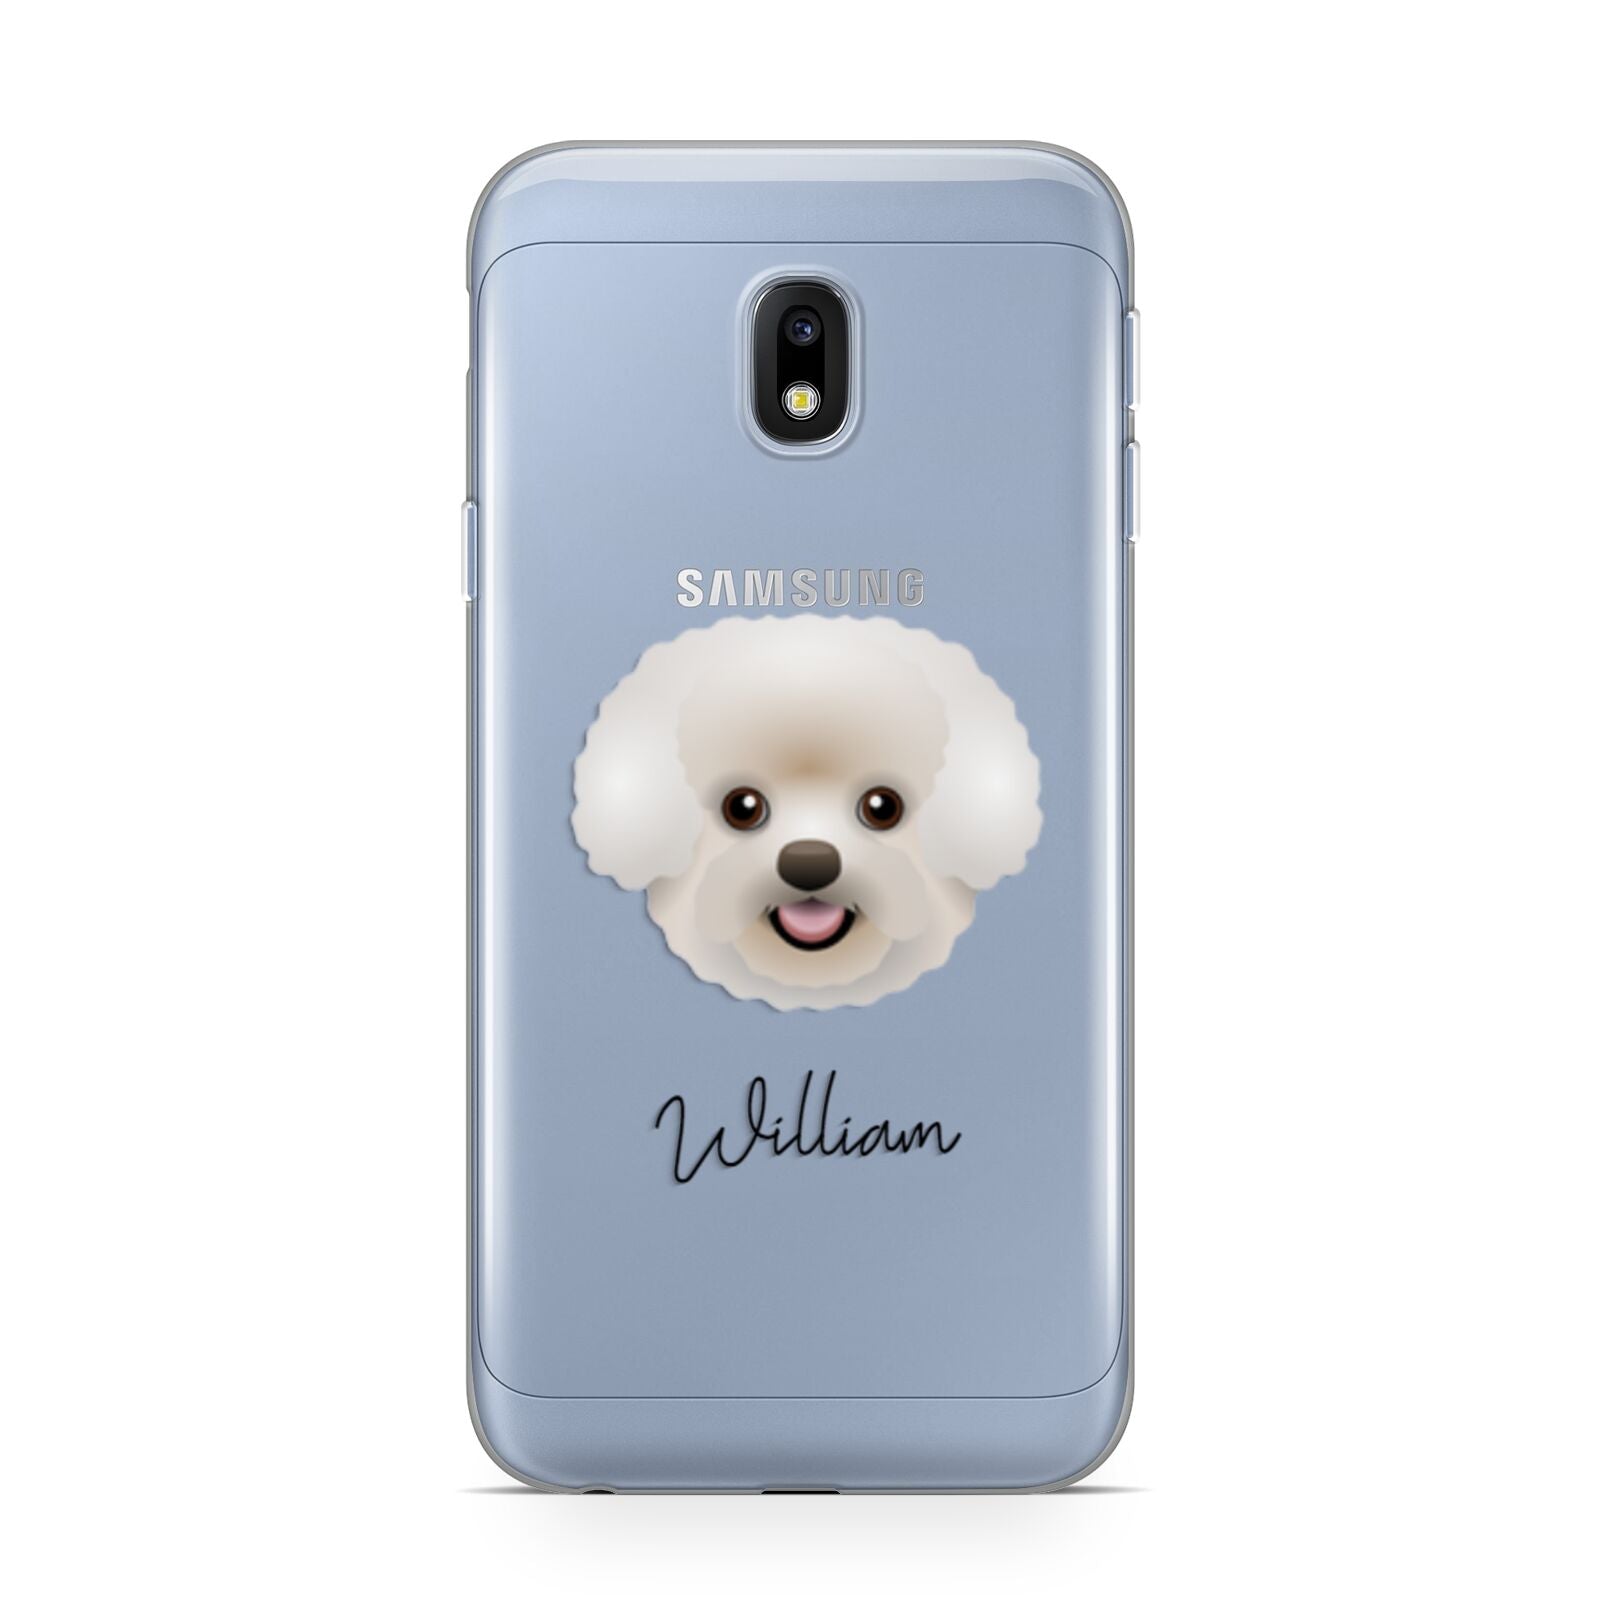 Bichon Frise Personalised Samsung Galaxy J3 2017 Case